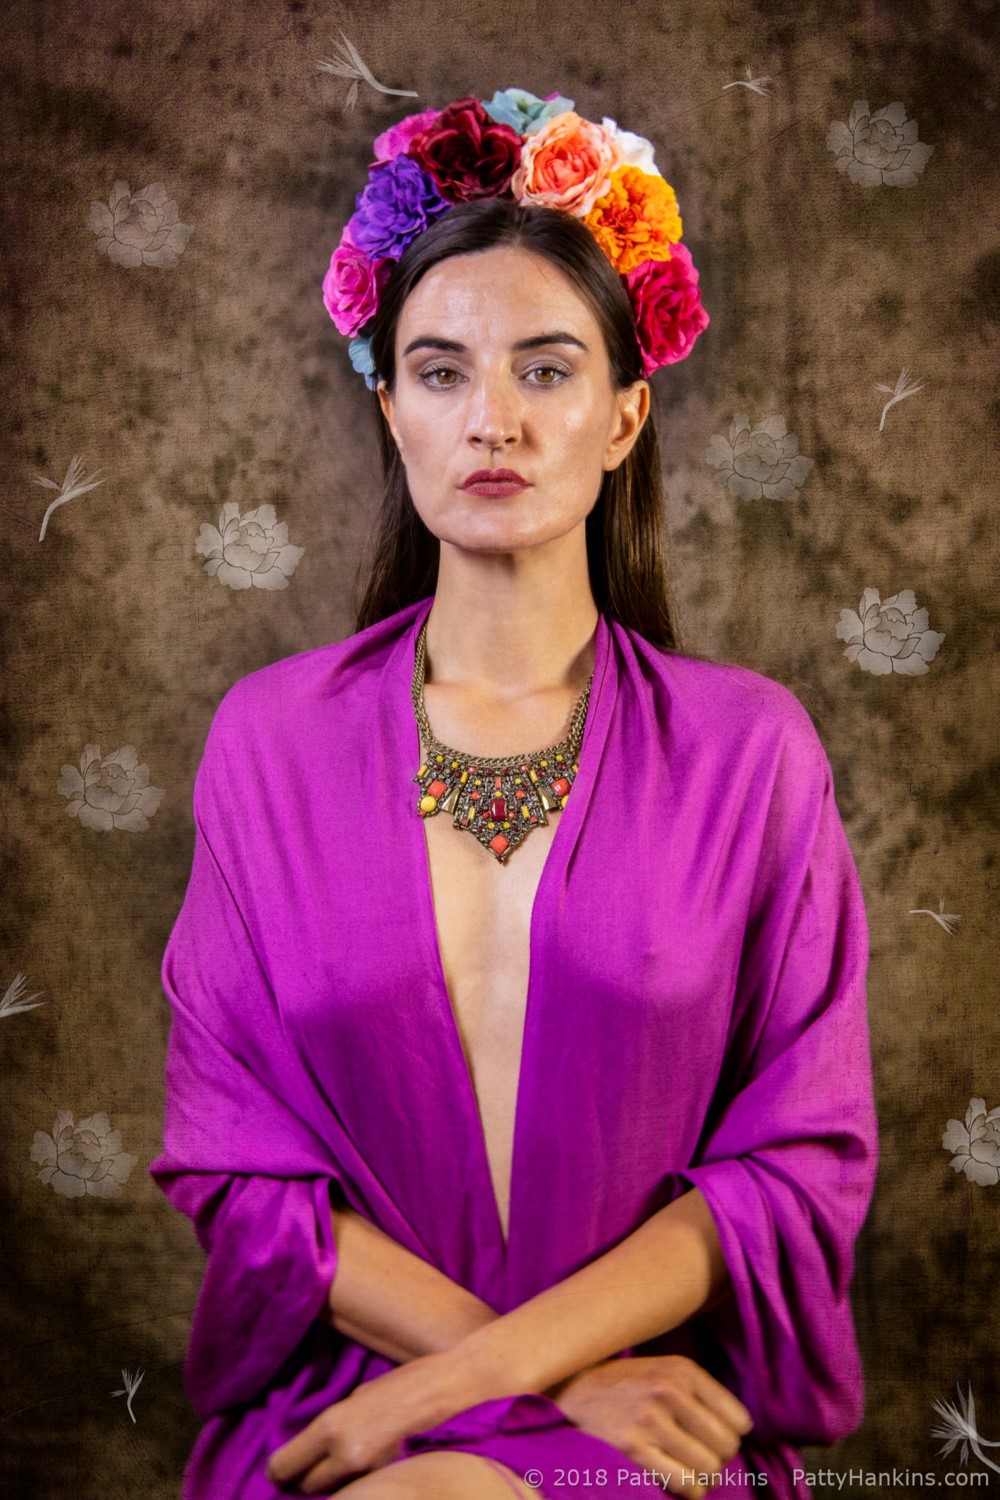 Inspired by Frida - Dakota Snow © 2018 Patty Hankins